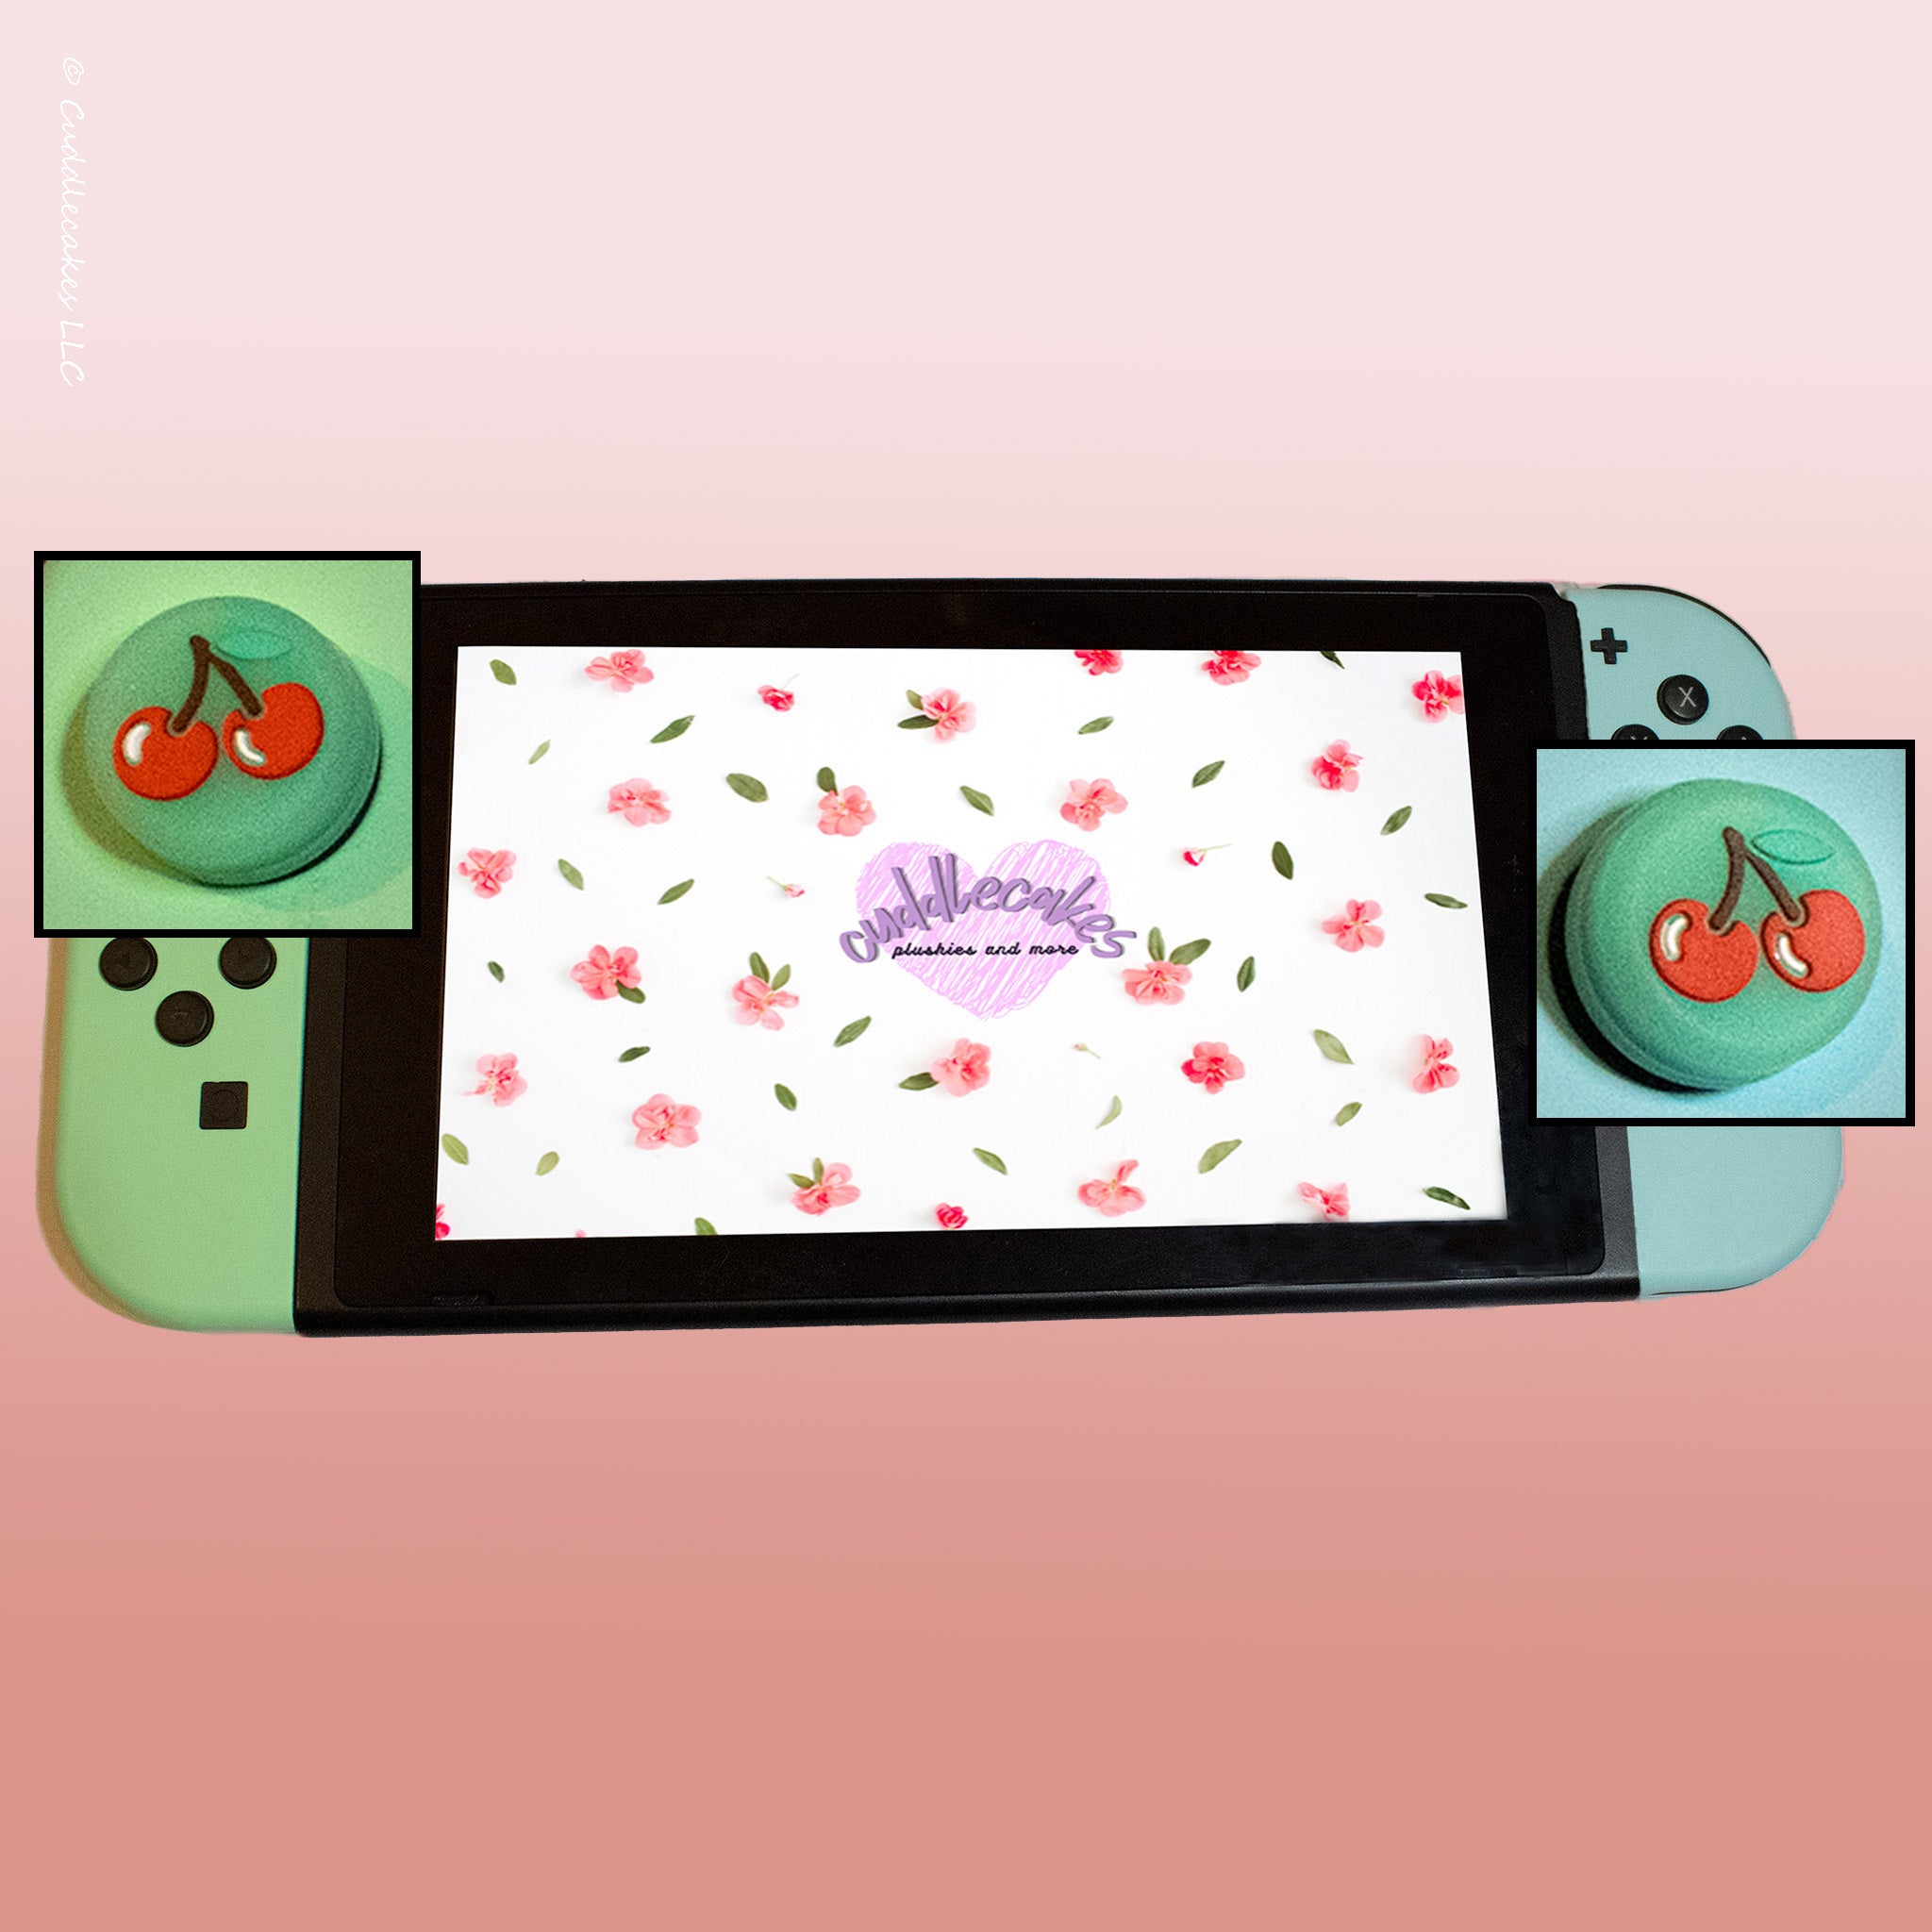 Cutie Fruity Thumb Grips for Nintendo Switch